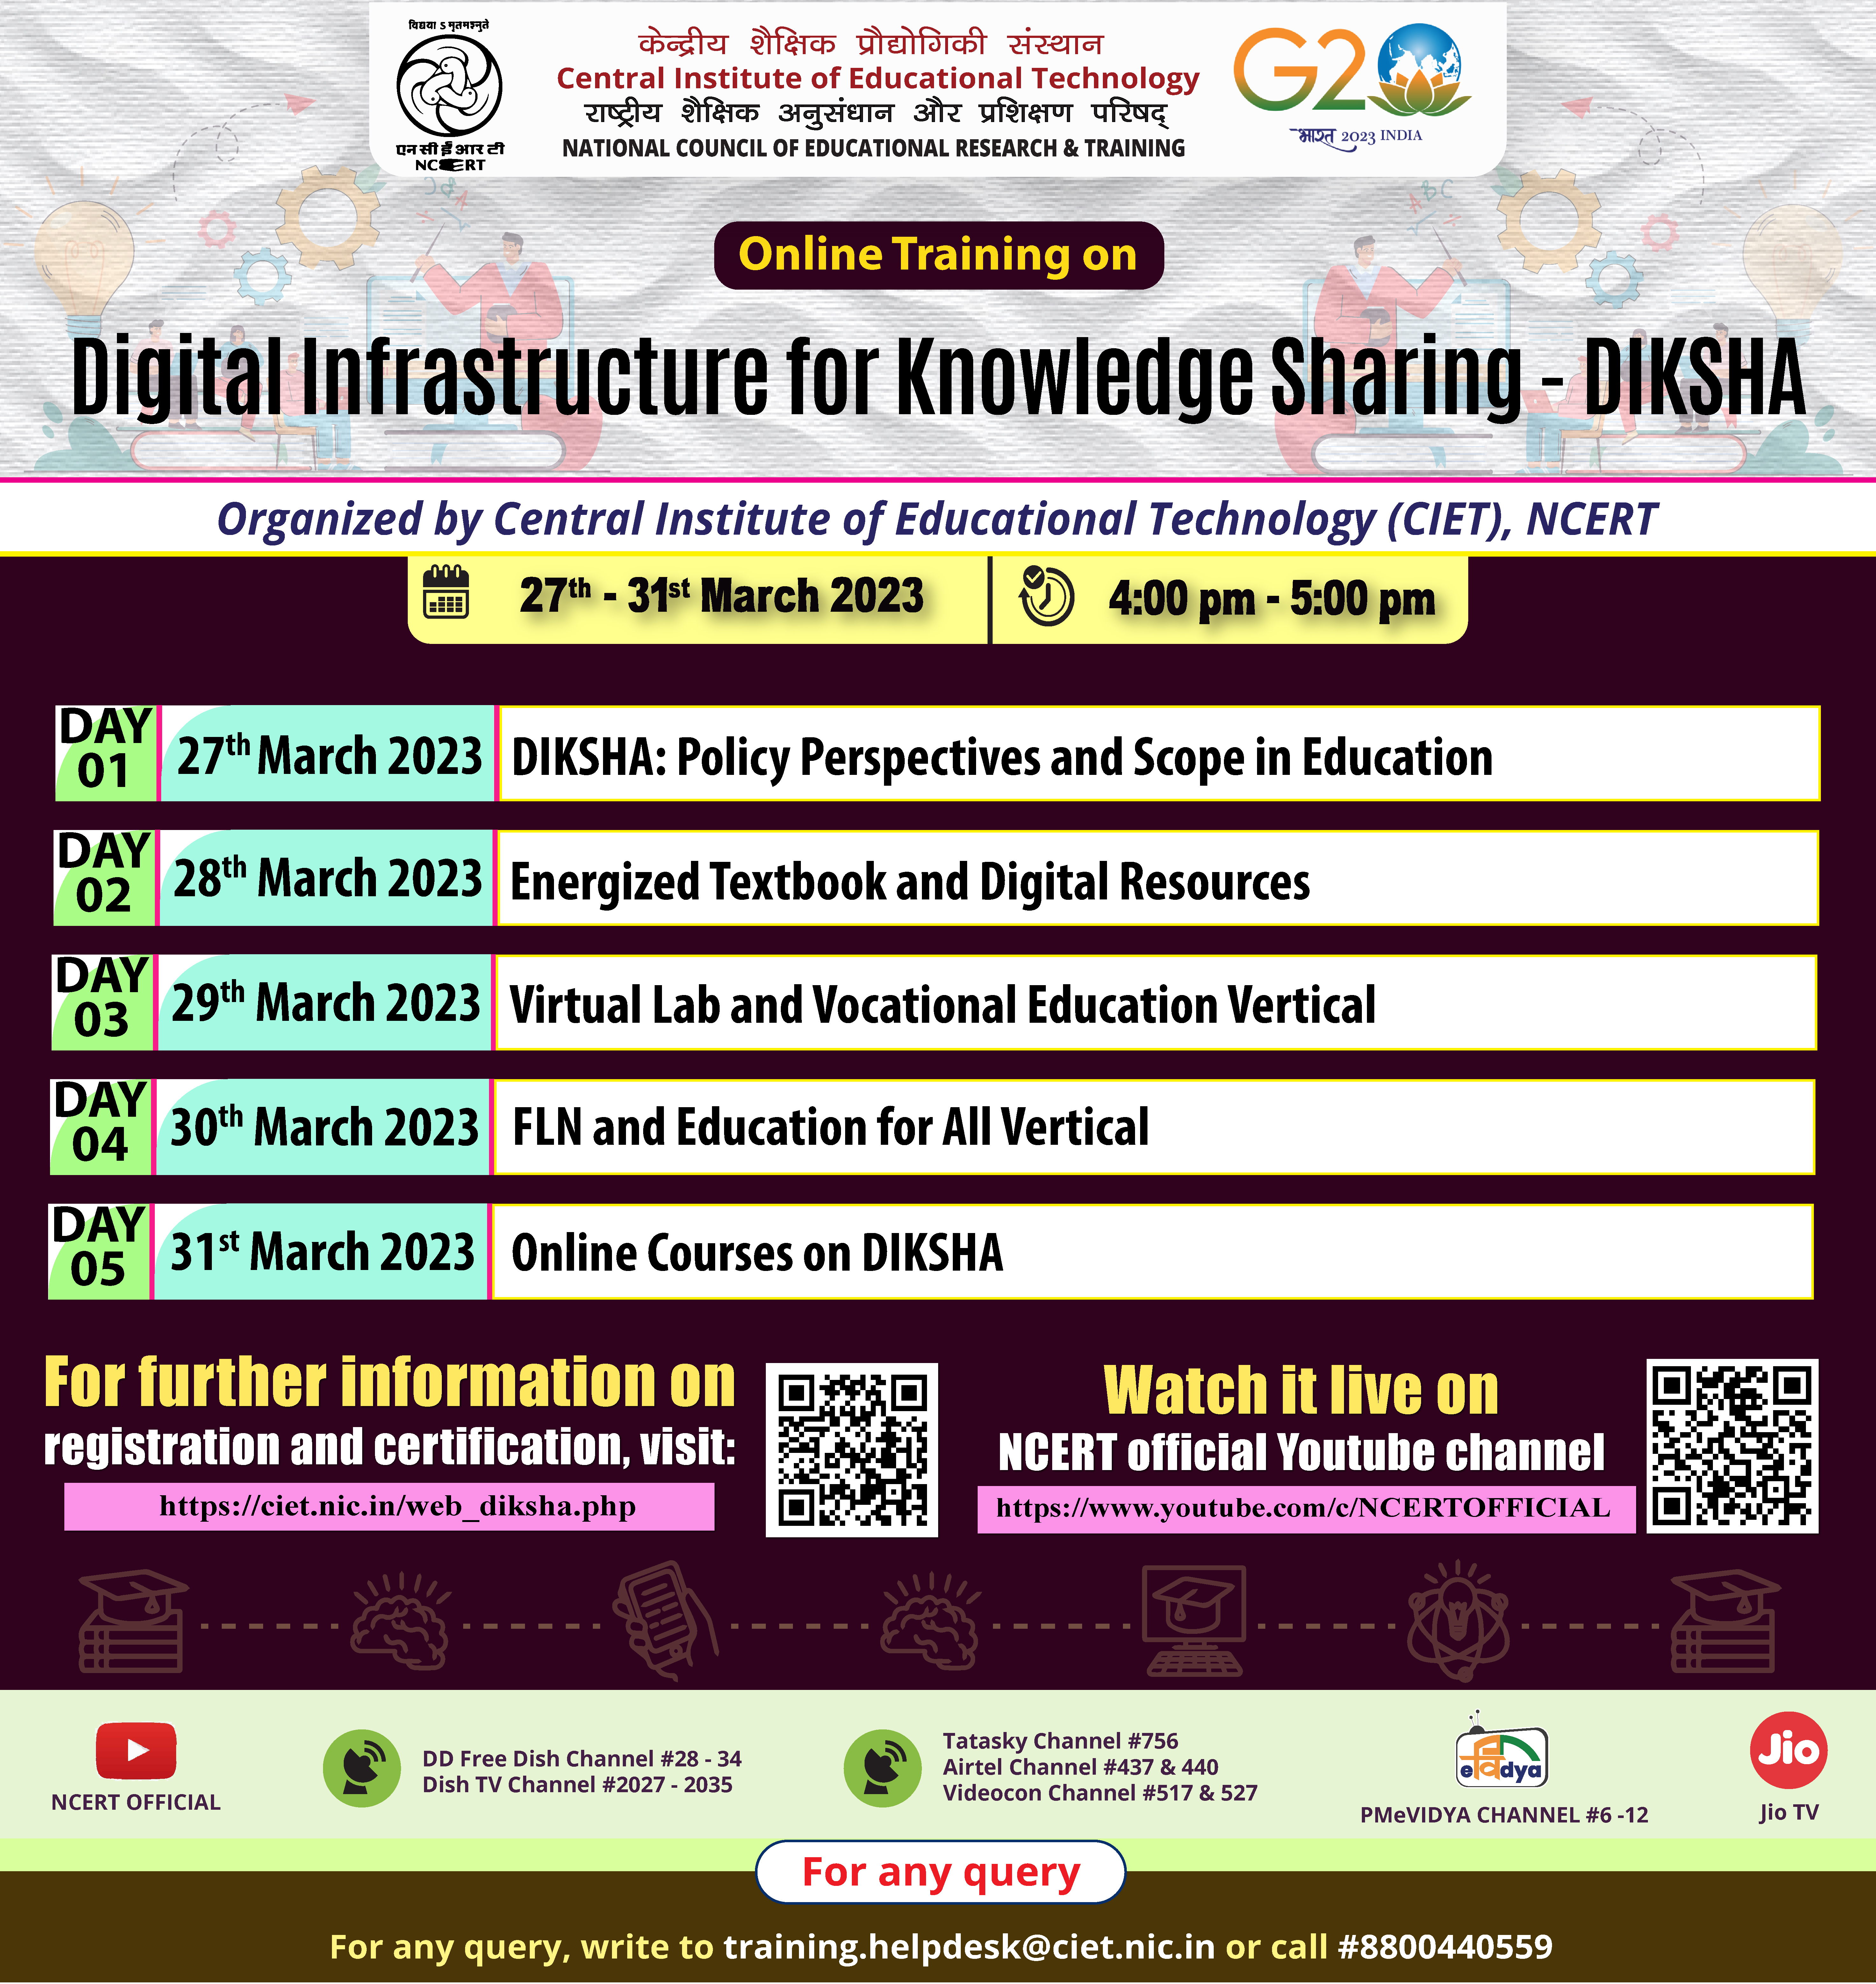 Online Training on Digital Infrastructure for Knowledge Sharing - DIKSHA Image